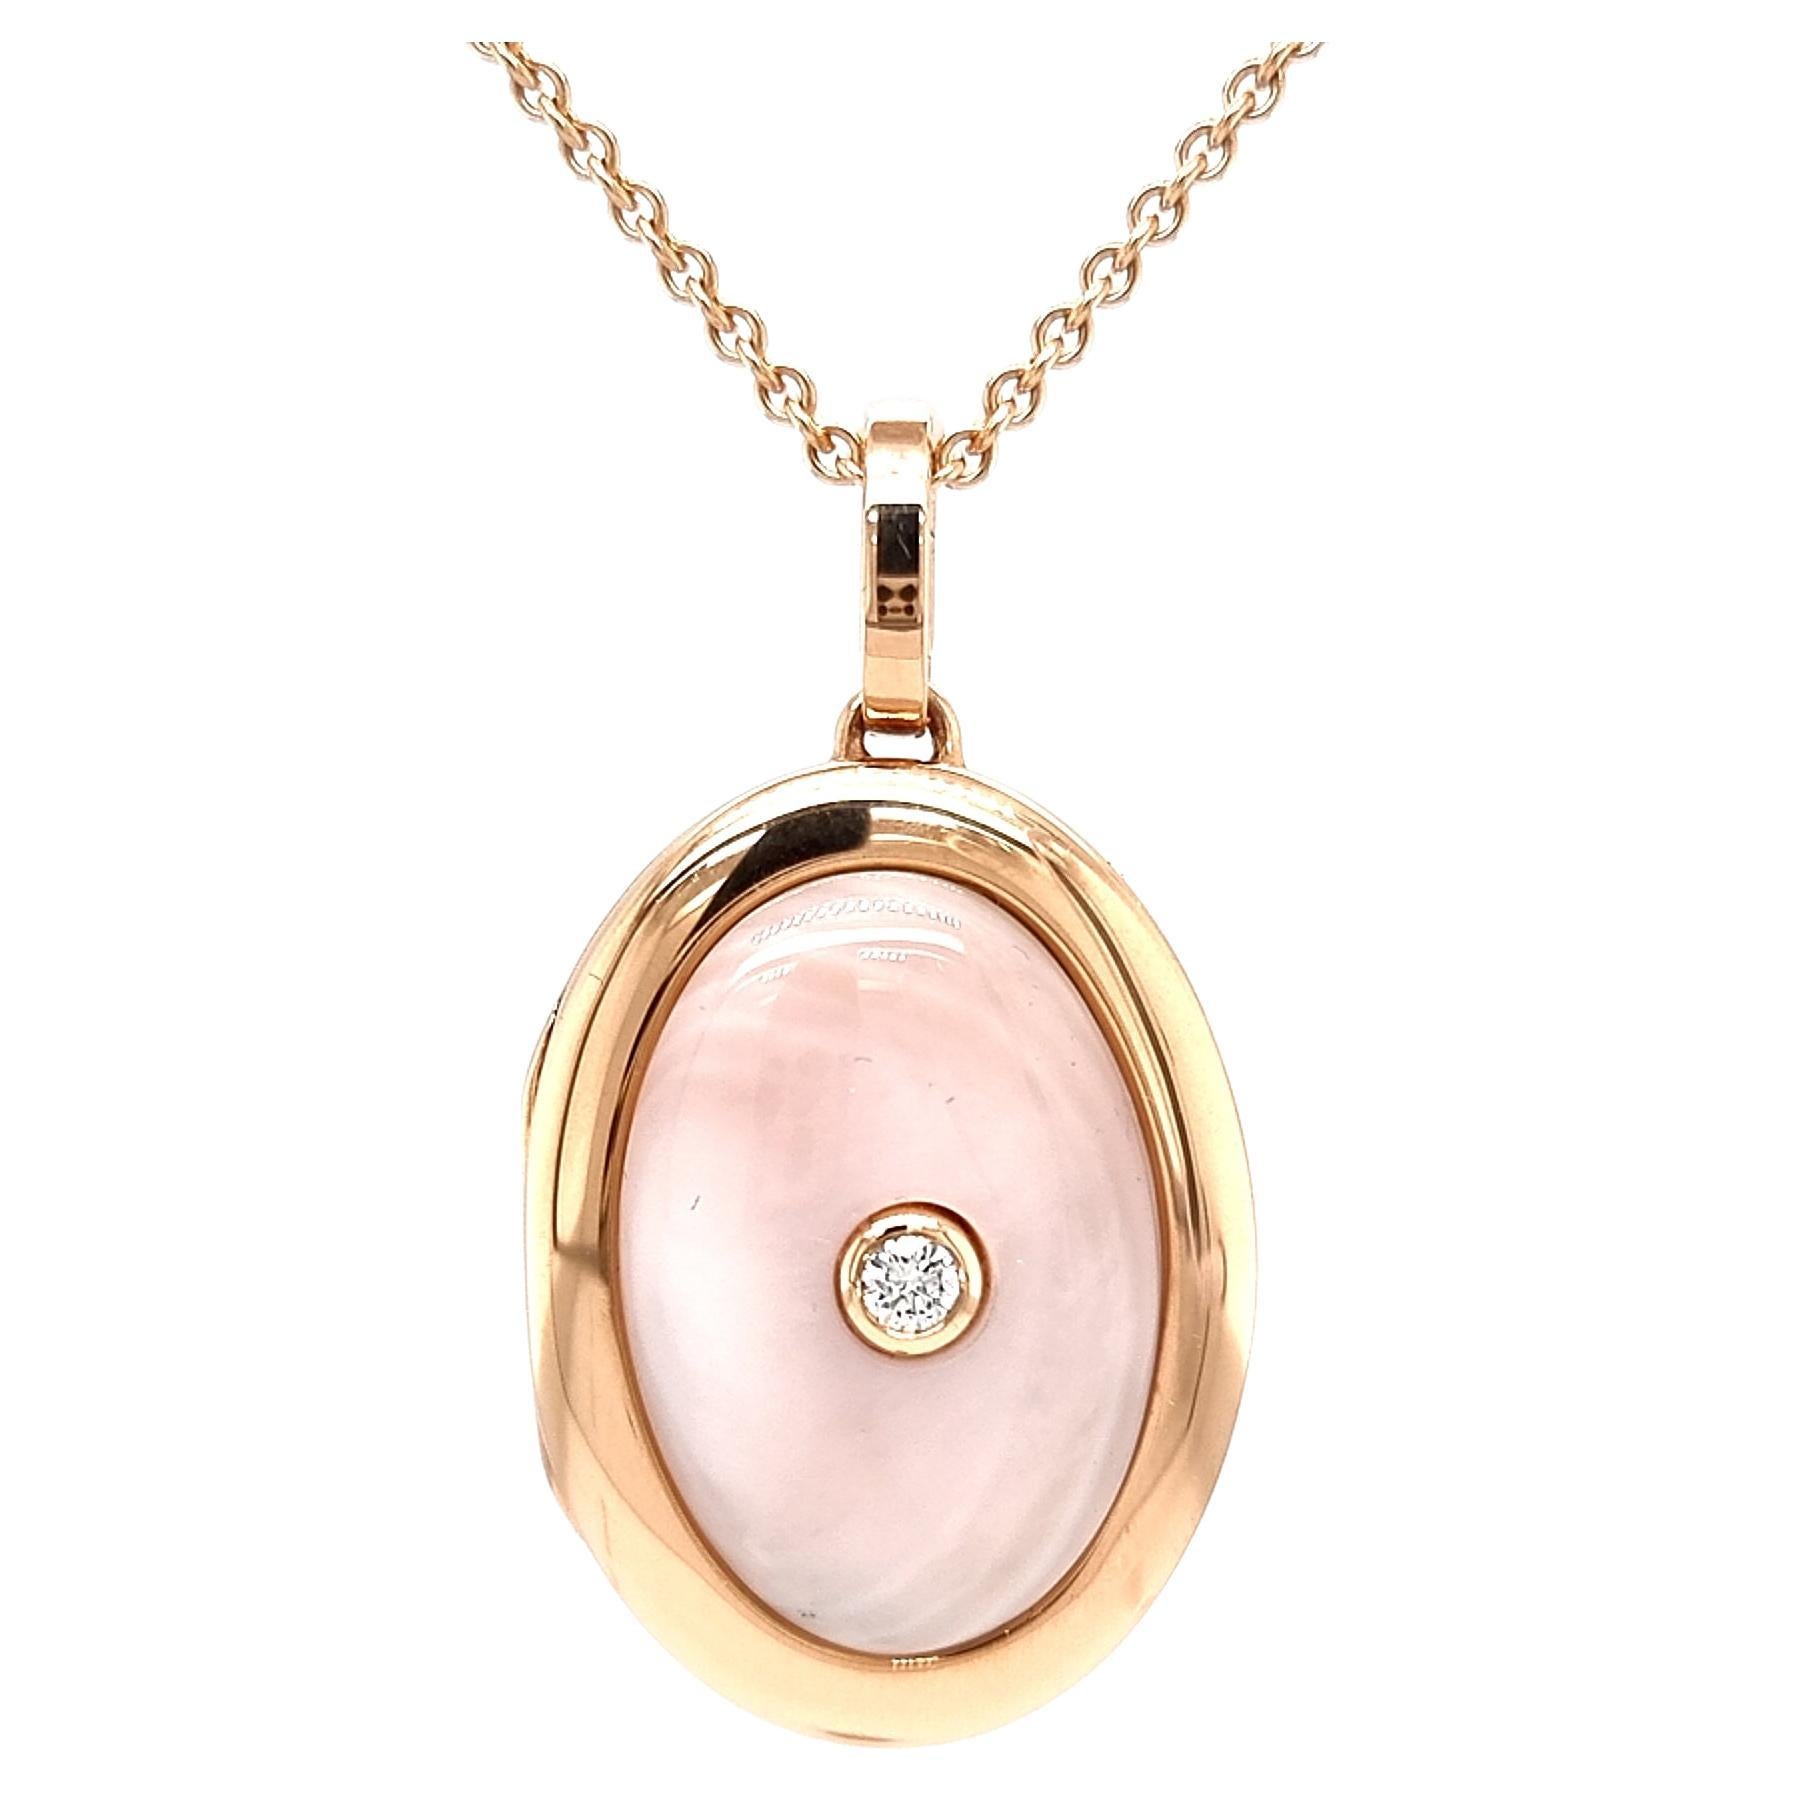 Ovaler Medaillon-Anhänger Halskette - 18k Roségold - 1 Diamant 0,10 ct H VS Rosa Perle